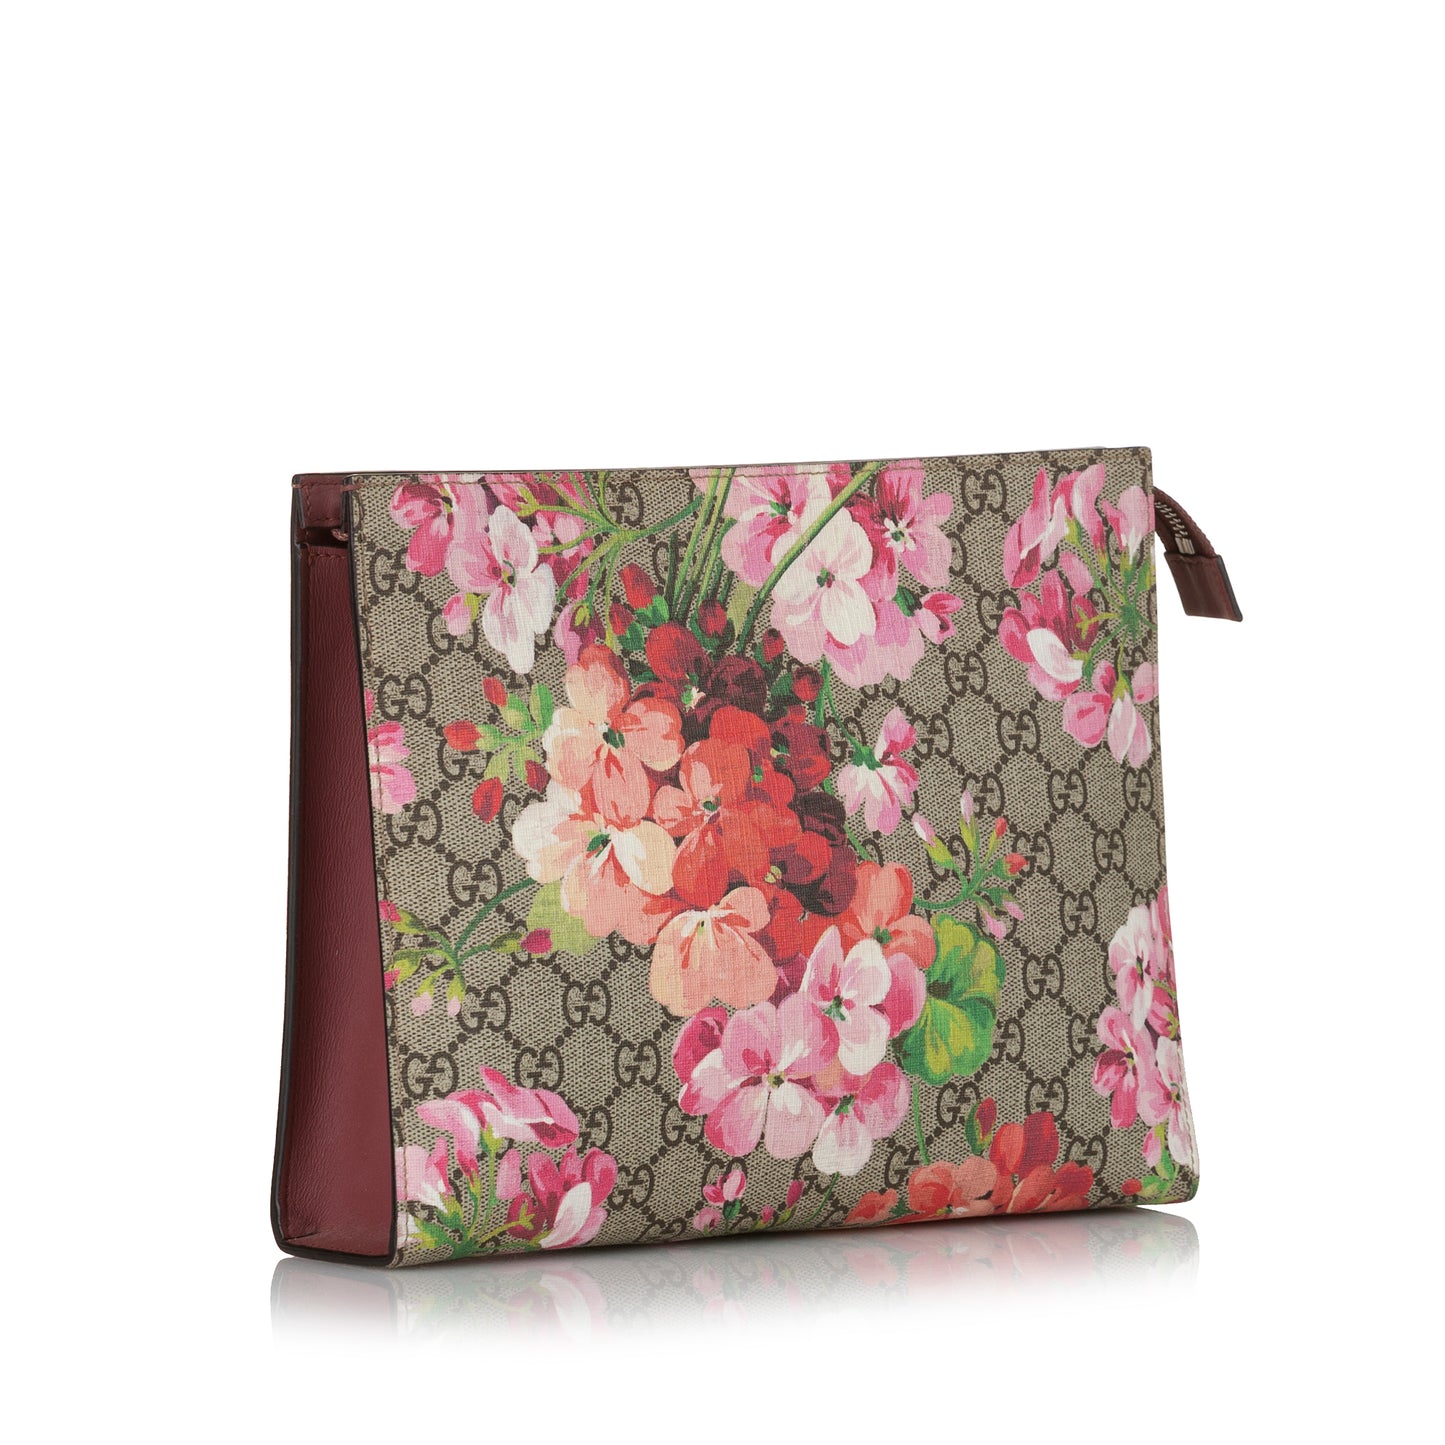 GG Blooms Clutch Bag